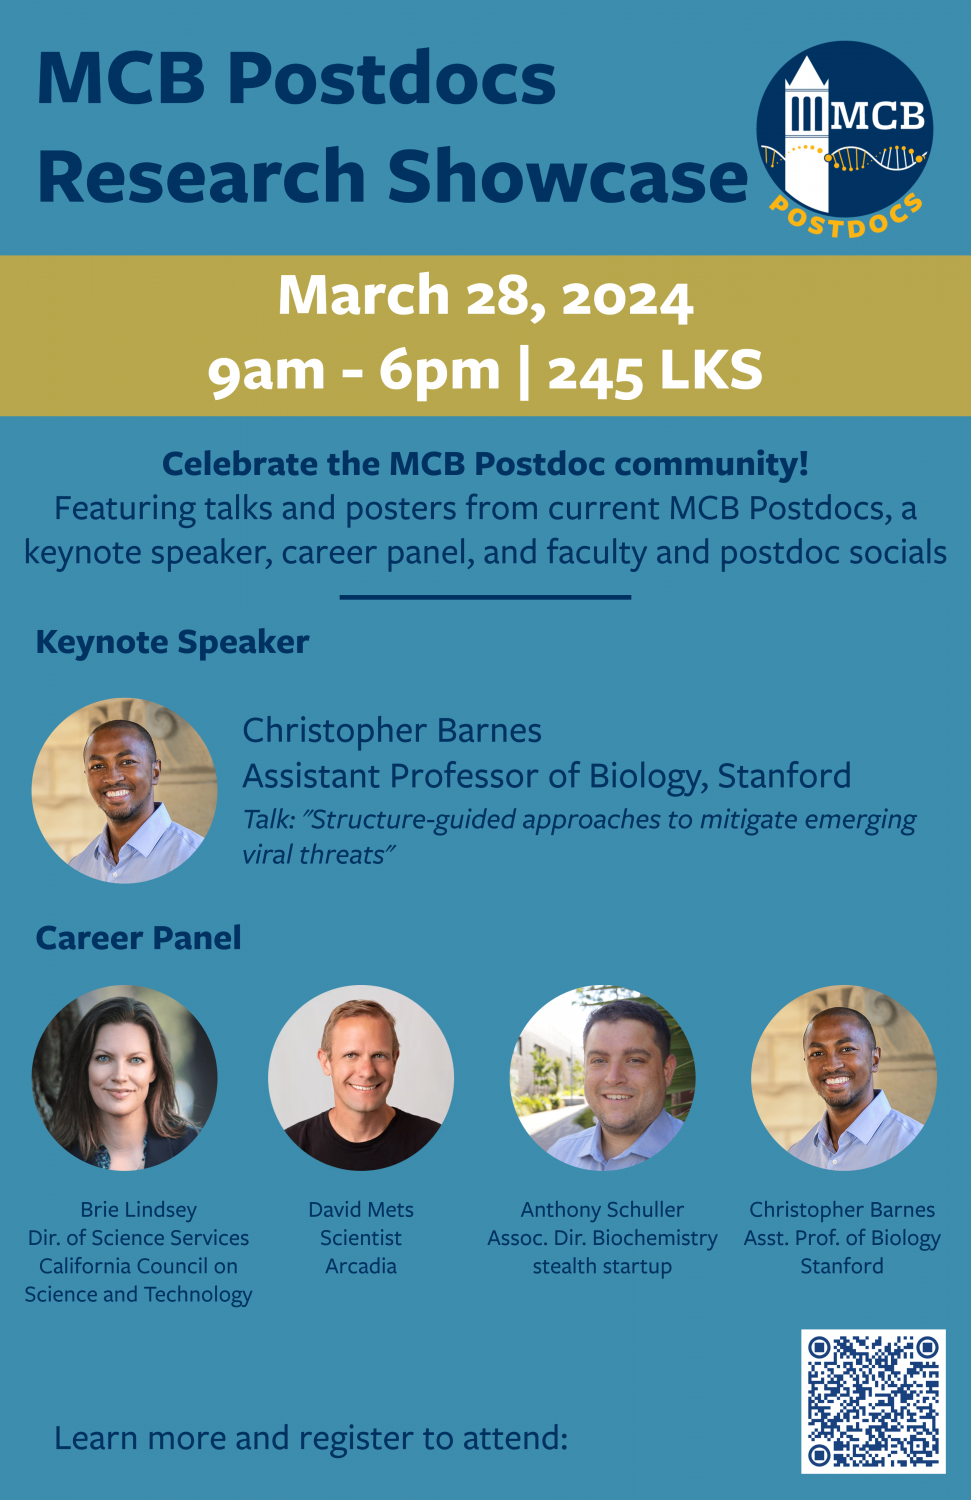 MCB Postdocs Research Showcase event flyer